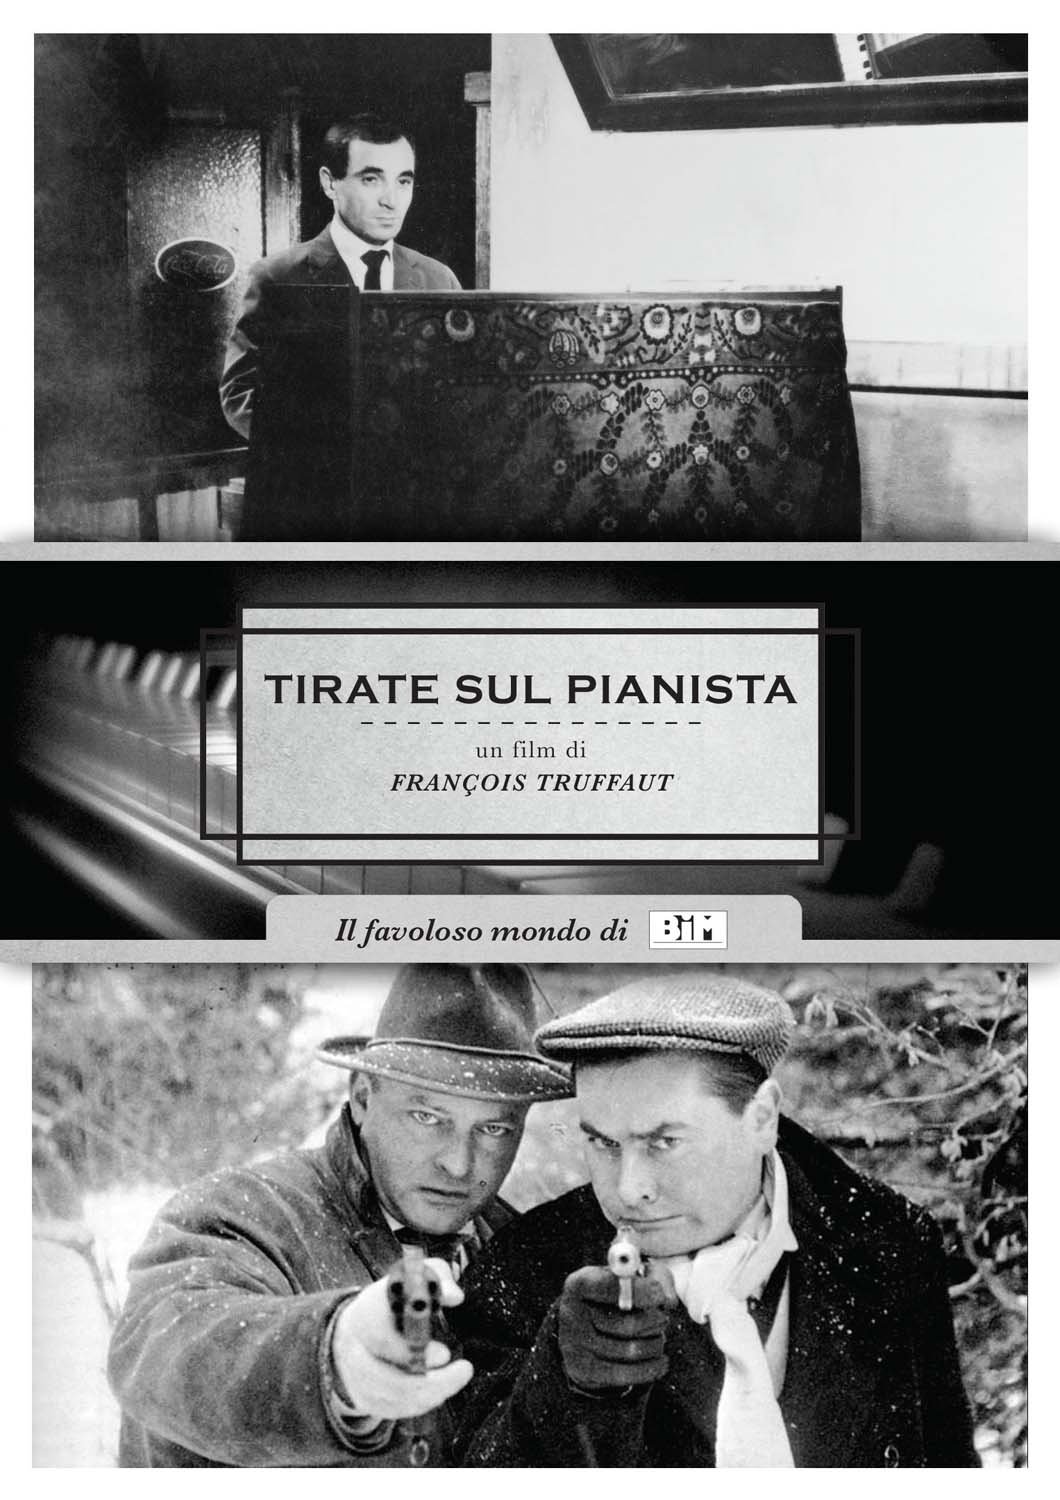 Tirate sul pianista [B/N] [HD] (1960)